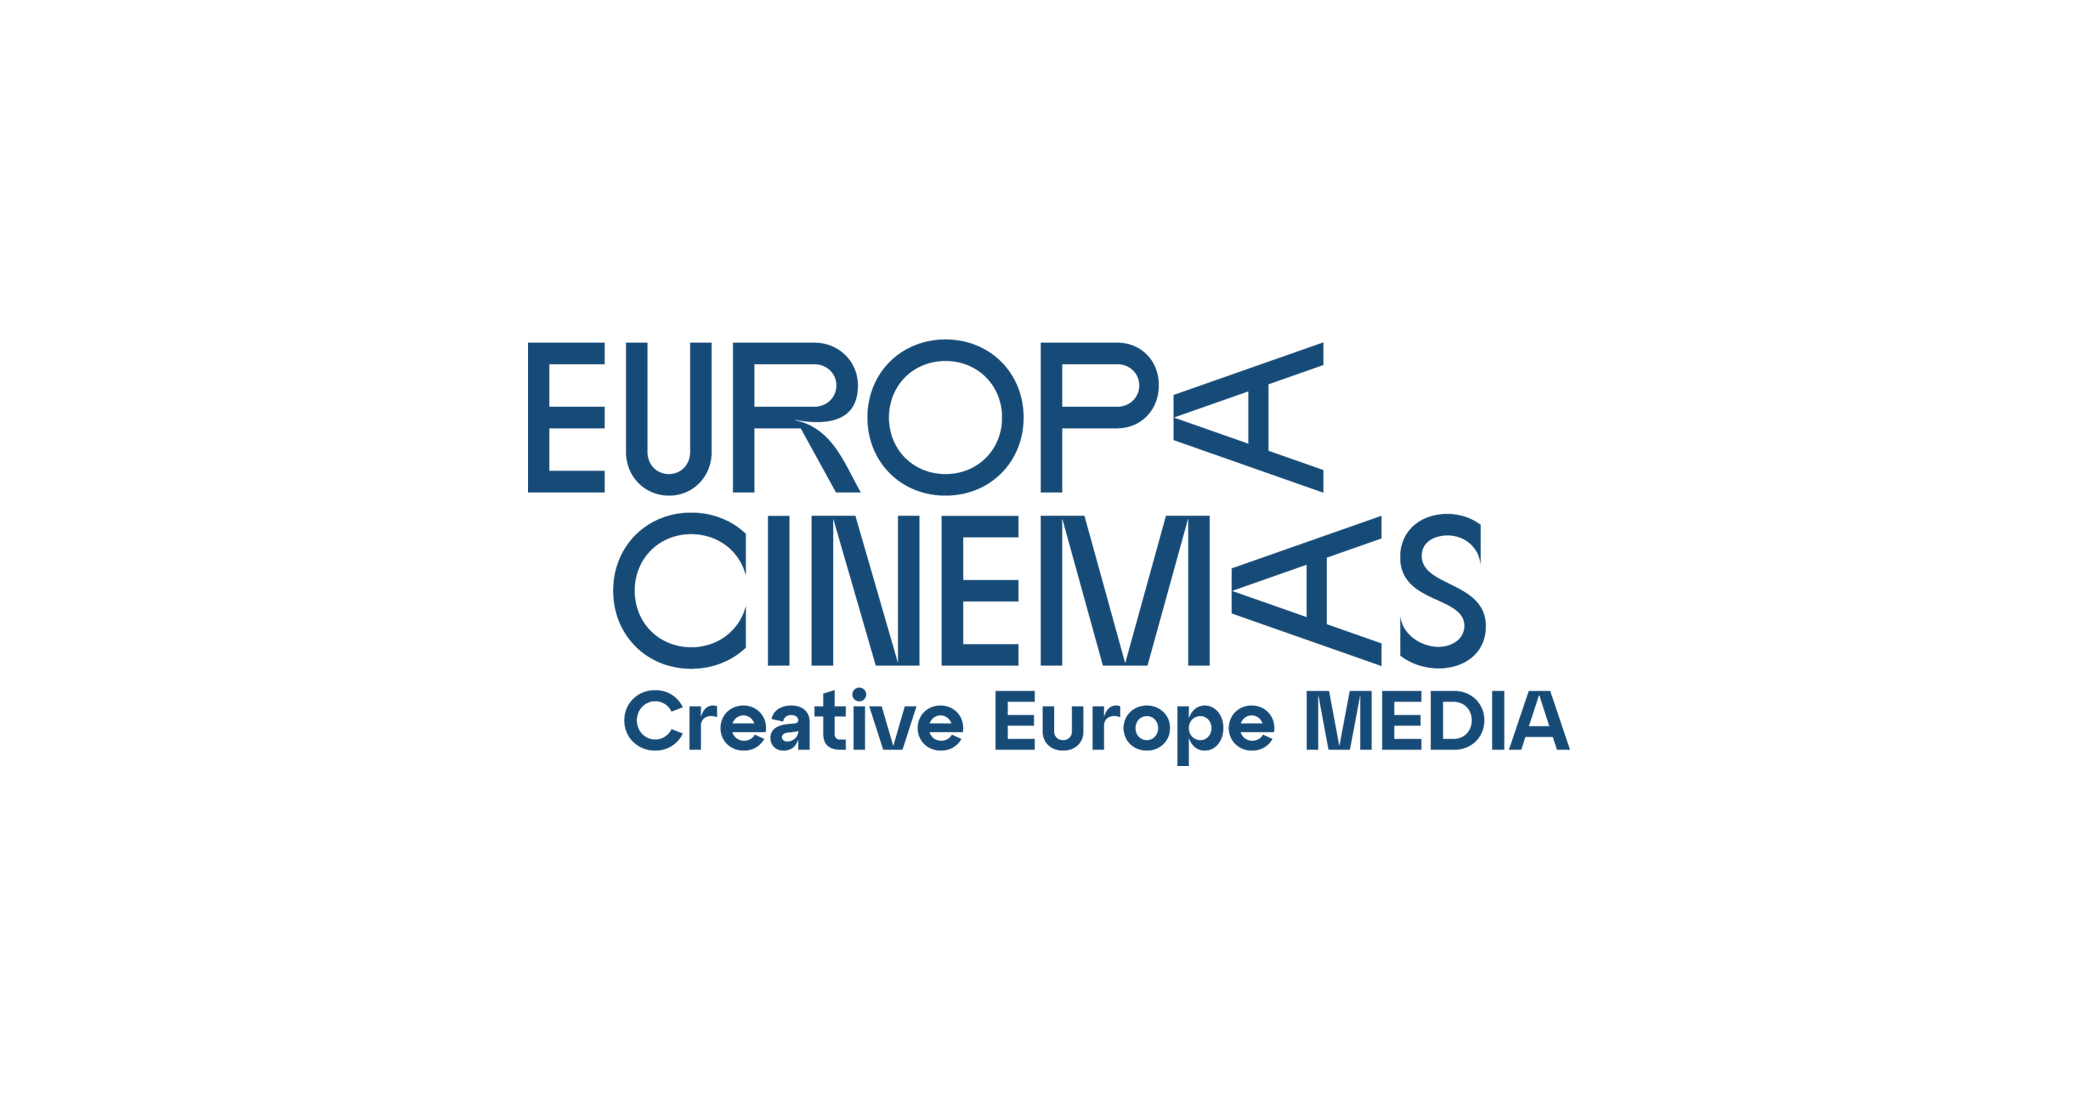 European cinema